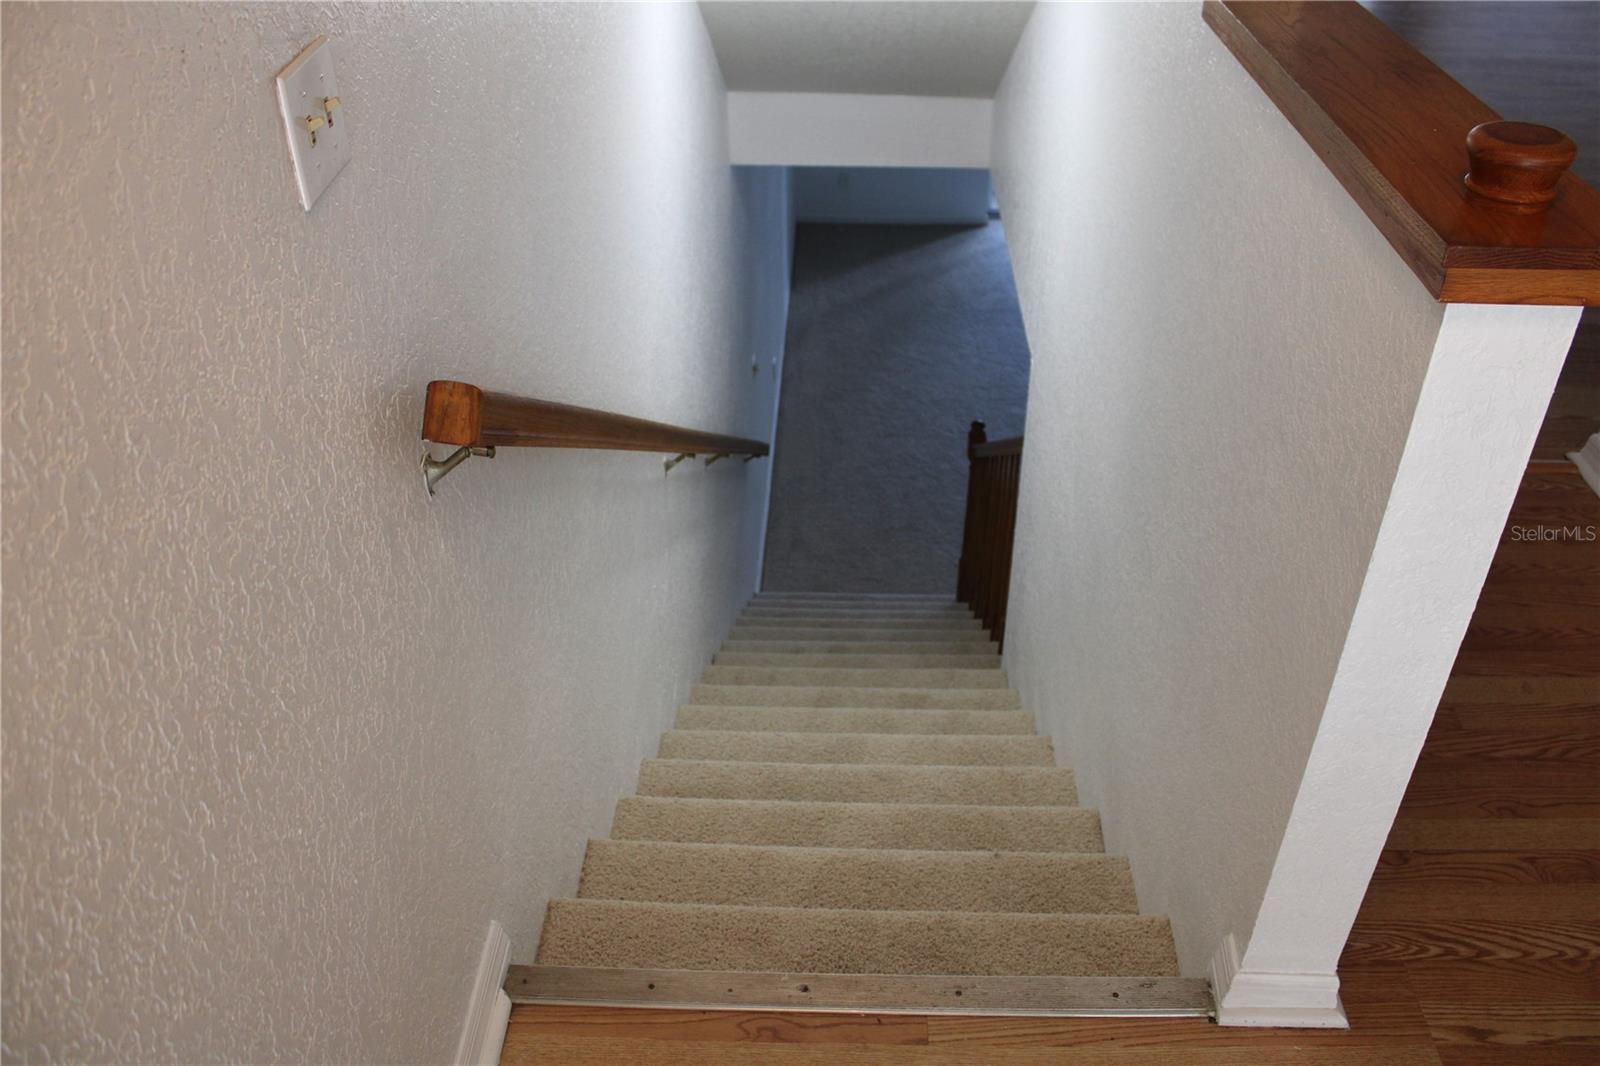 Stairs to lower level bonus room